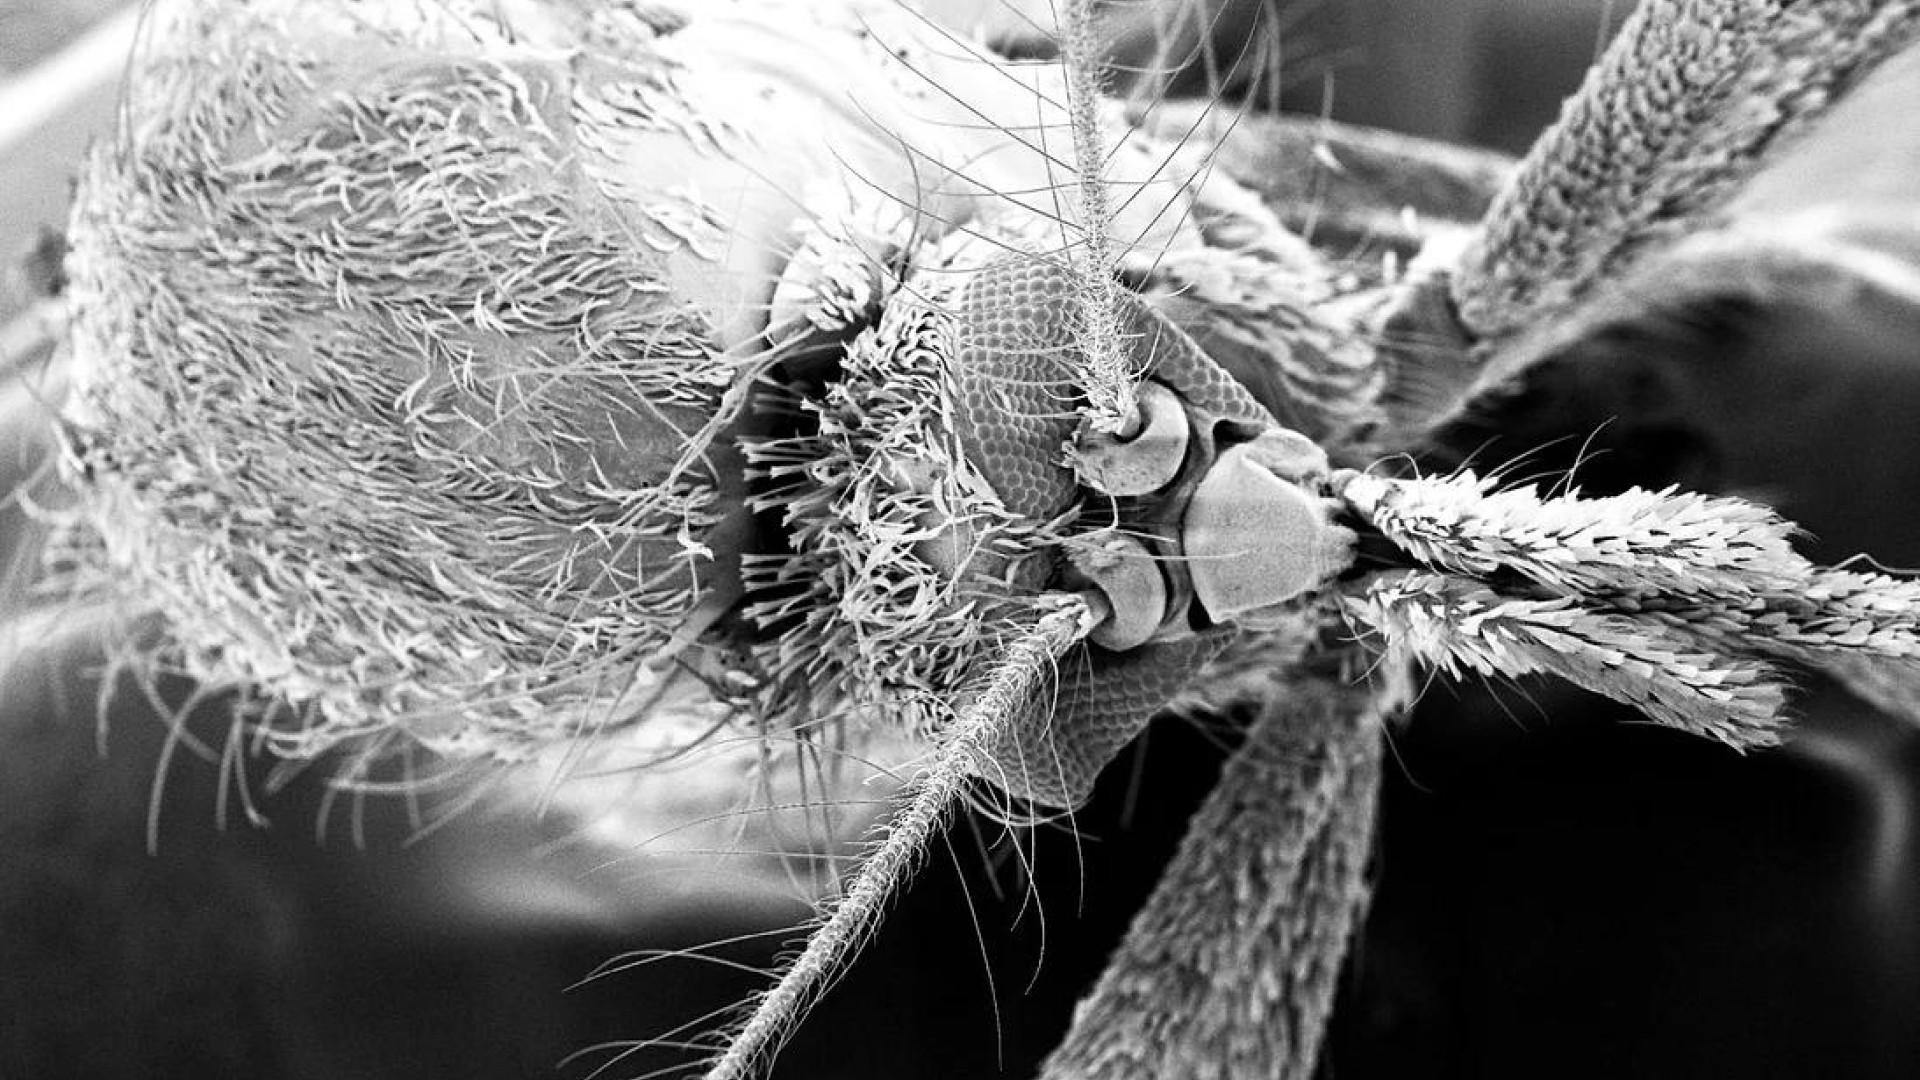 SEM microscope image of Mosquito